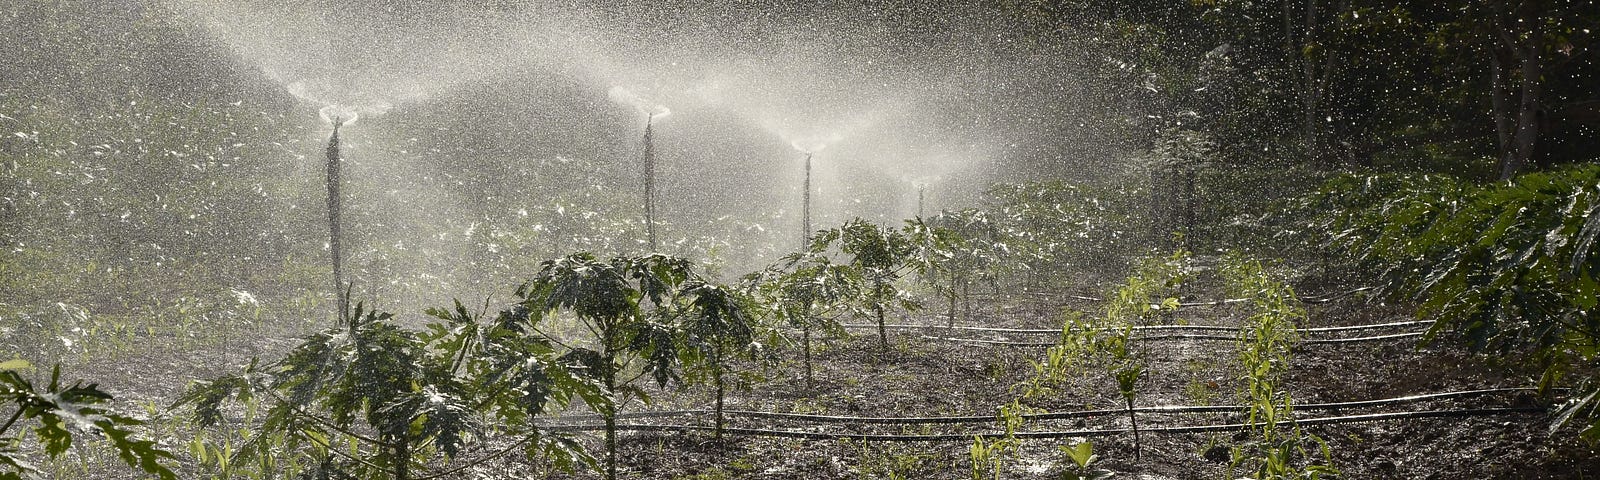 Spray irrigation on crops